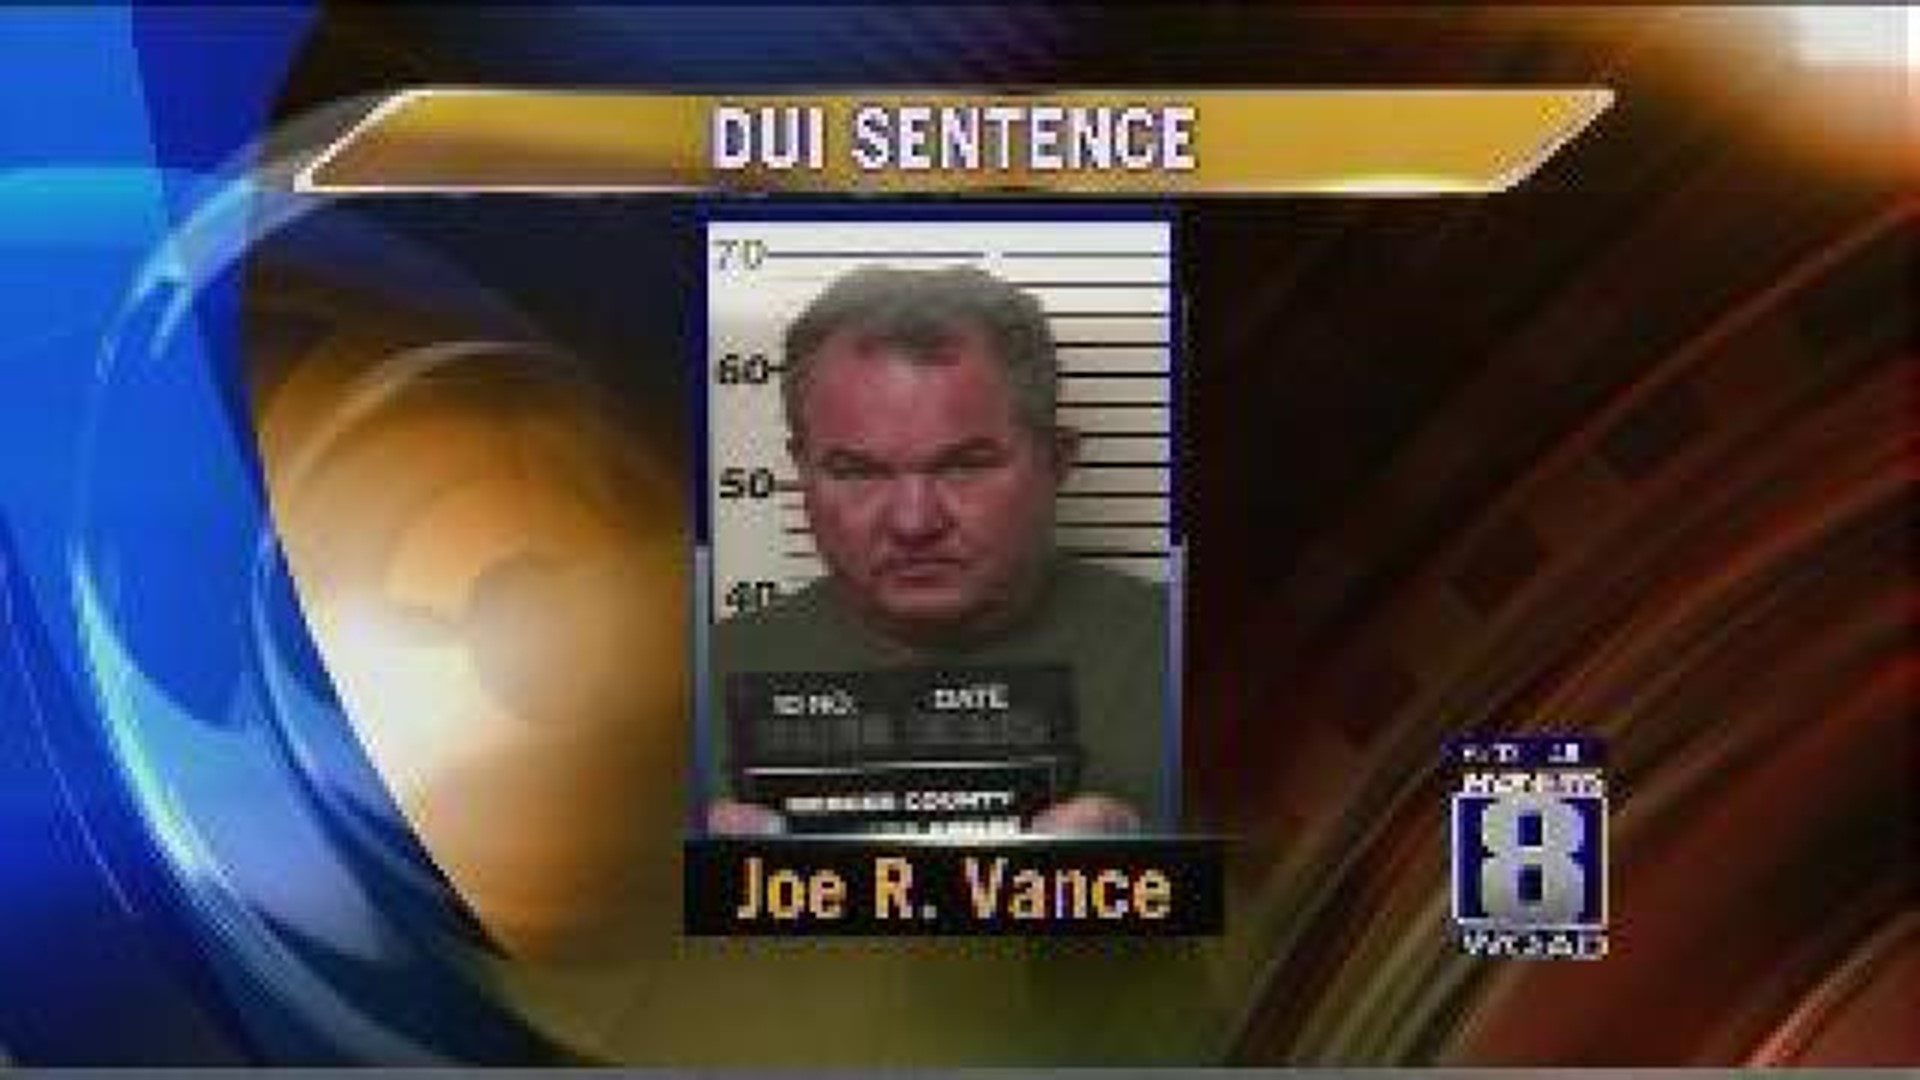 Aledo man sentenced after double DUI